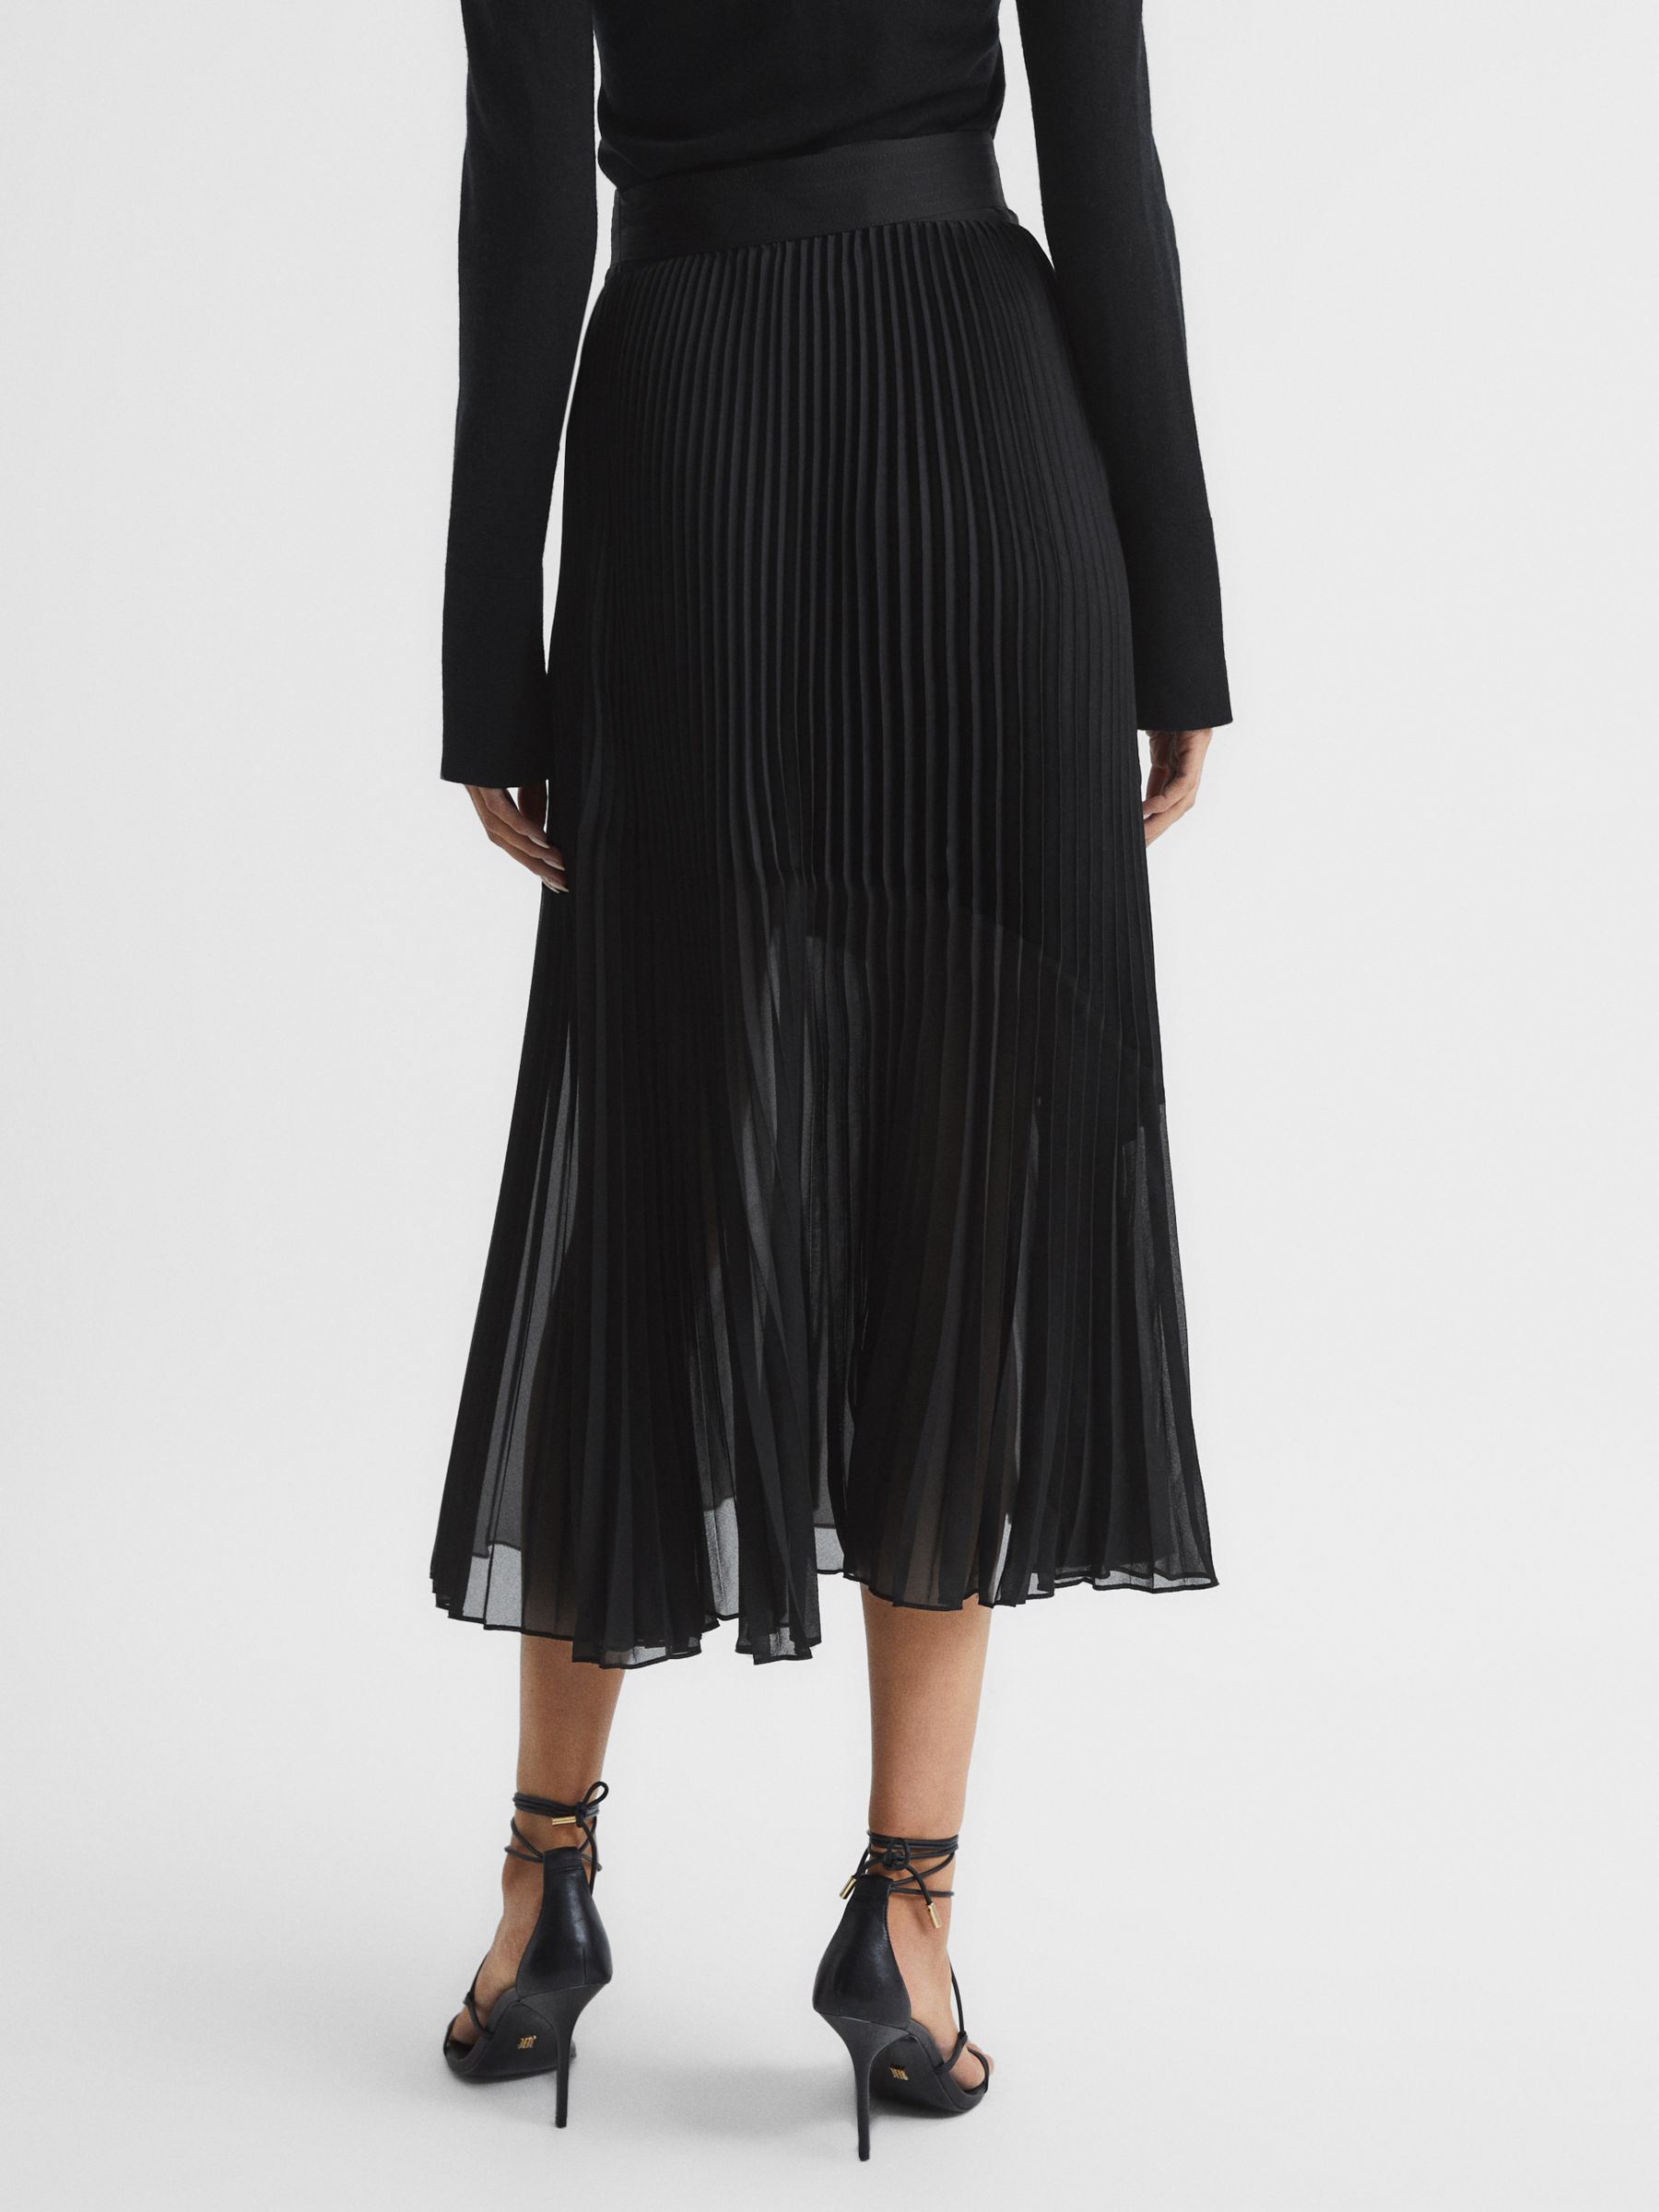 Reiss Anya Plisse Midi Skirt, Black at John Lewis & Partners